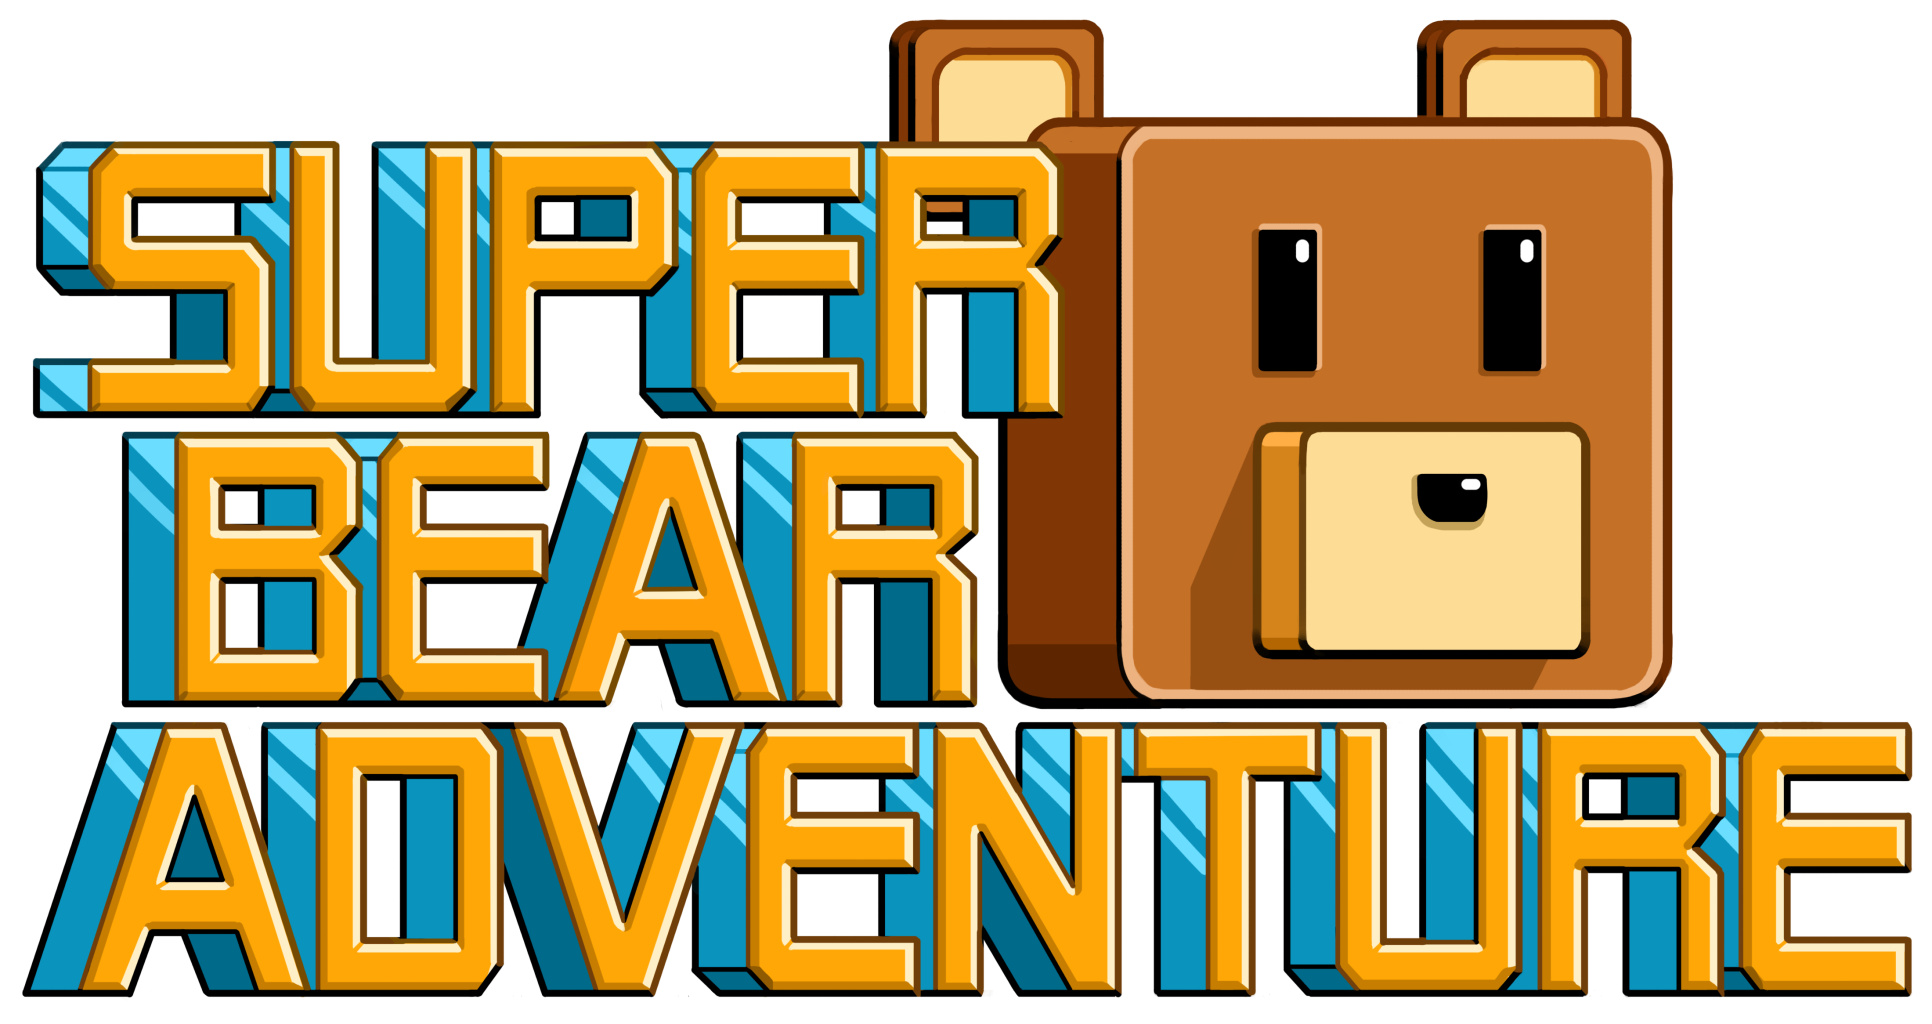 Super bear adventure 11.0 0. Супер Беар адвенчер. Игра супер Беар. Супер медведь игра. Супер Беар адвентуре игра.